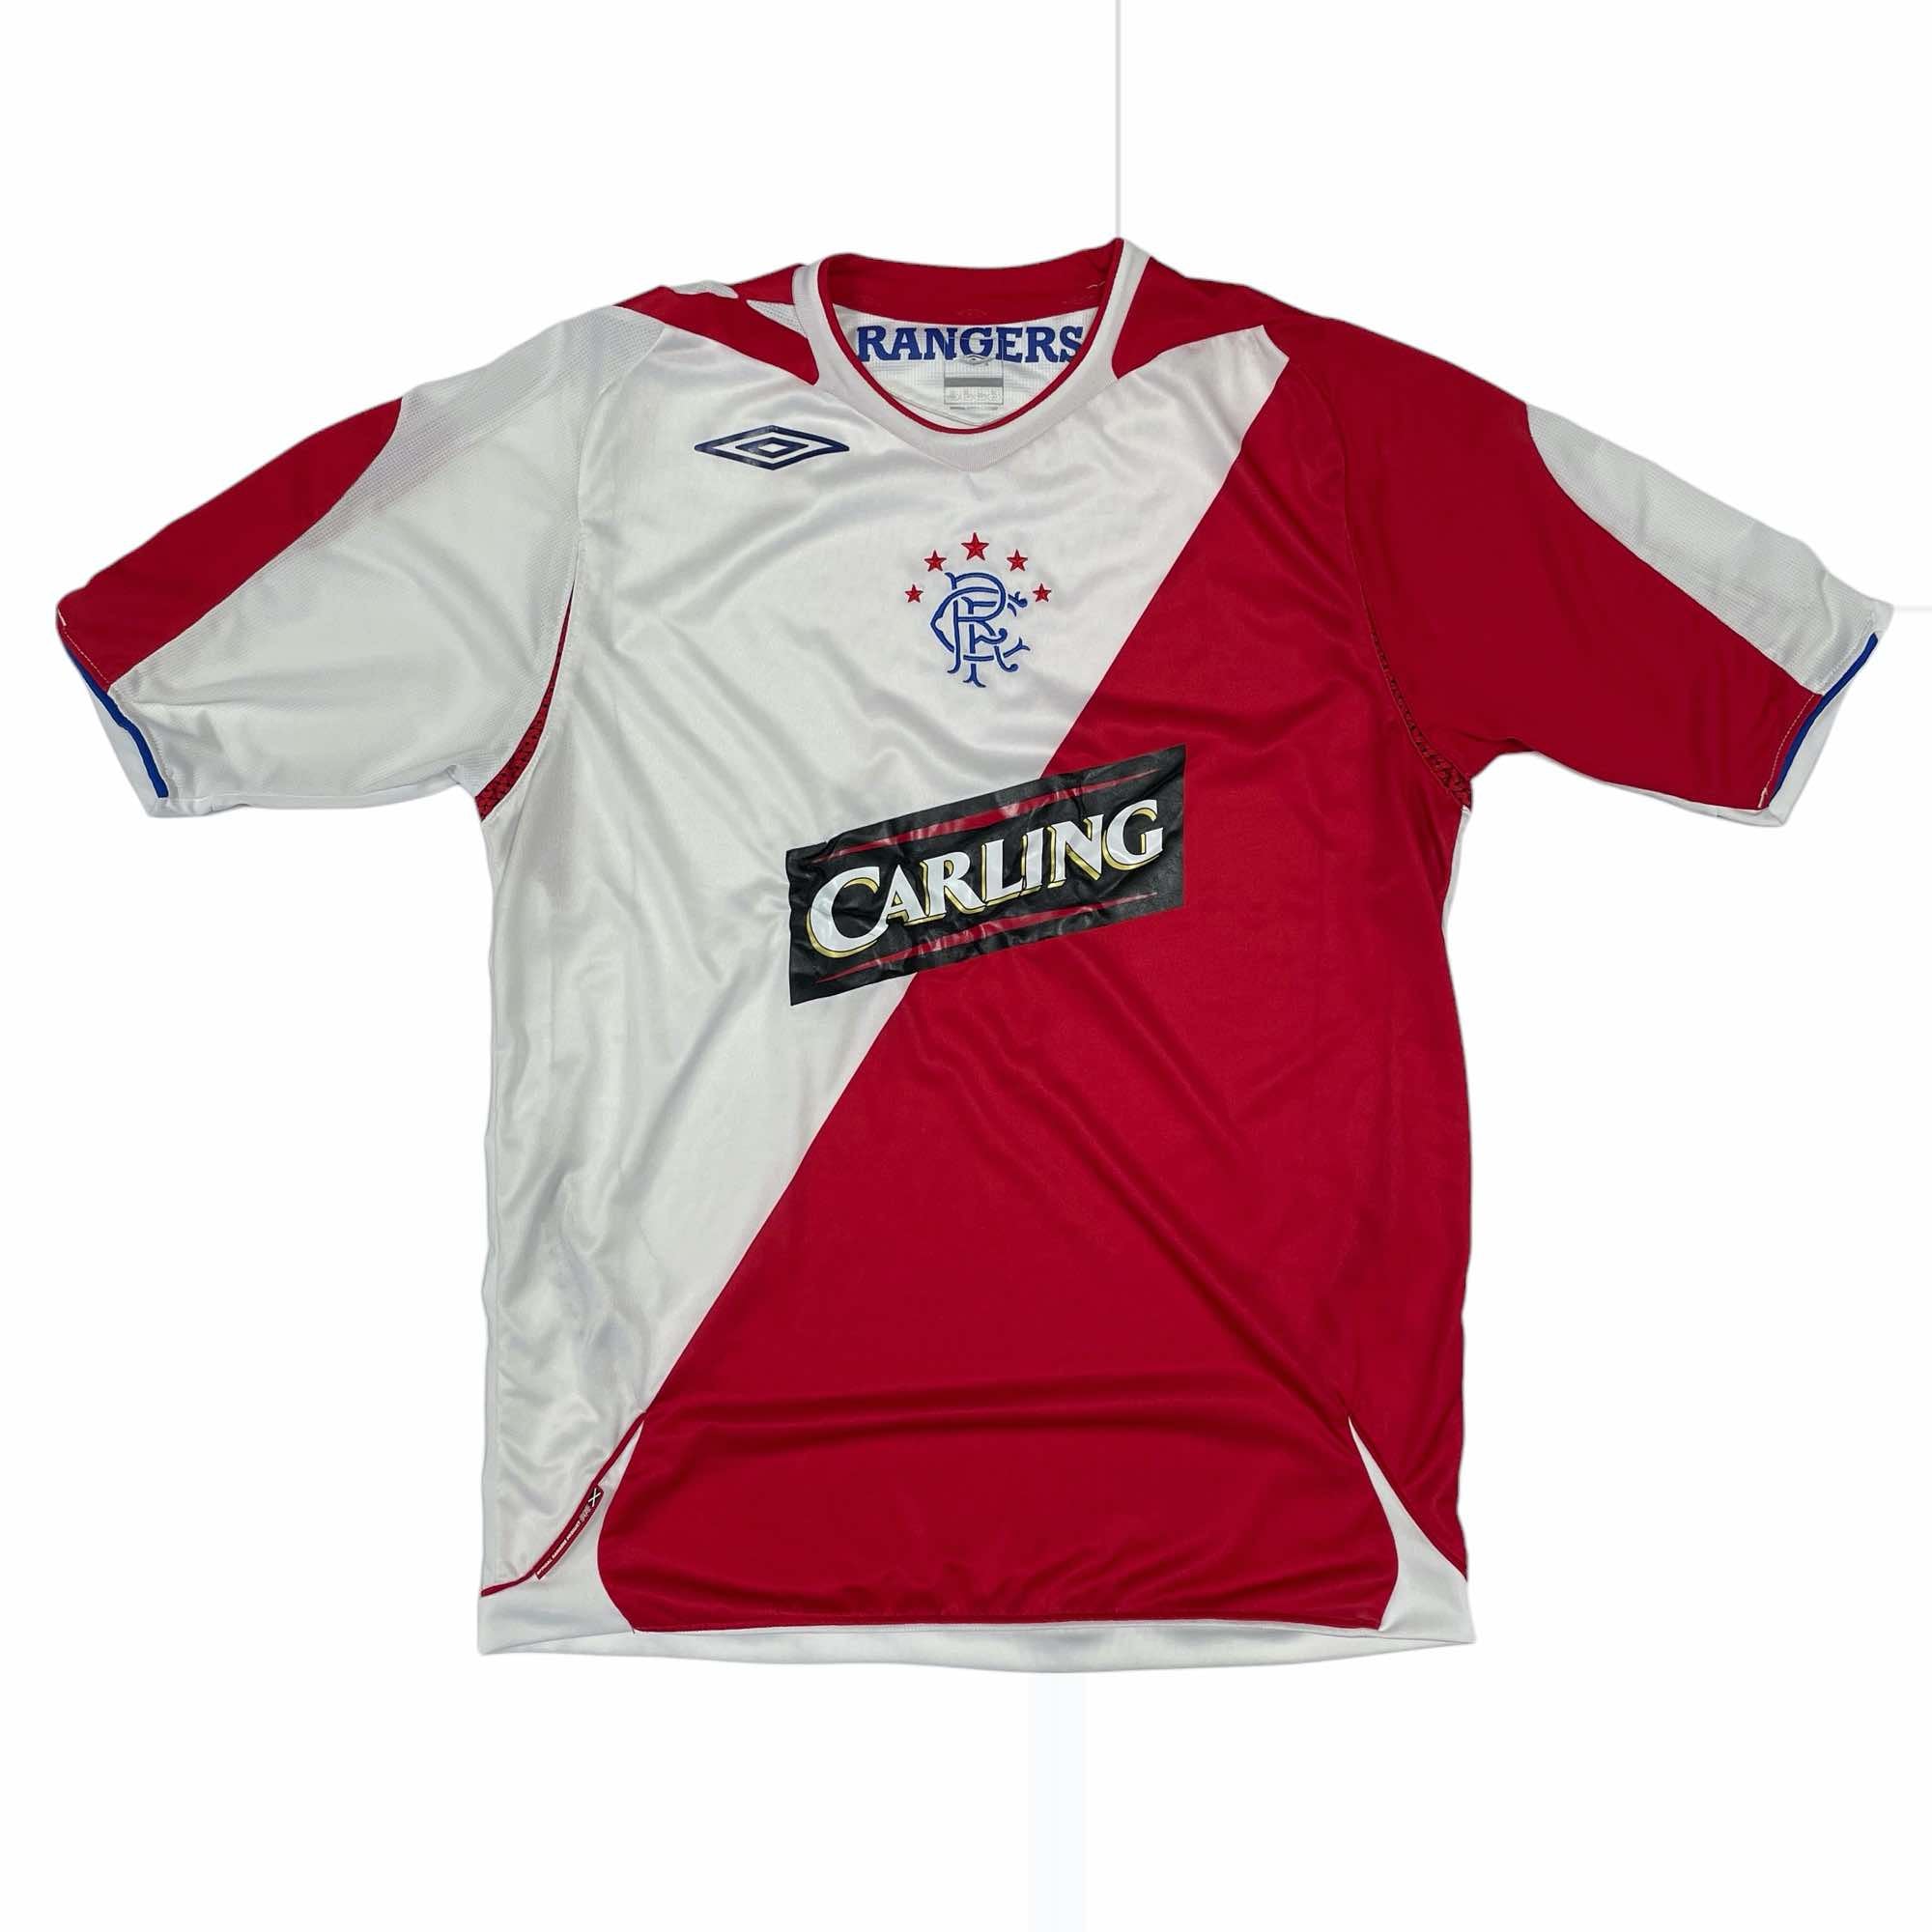 Rangers 2006/07 Umbro Shirt - Medium